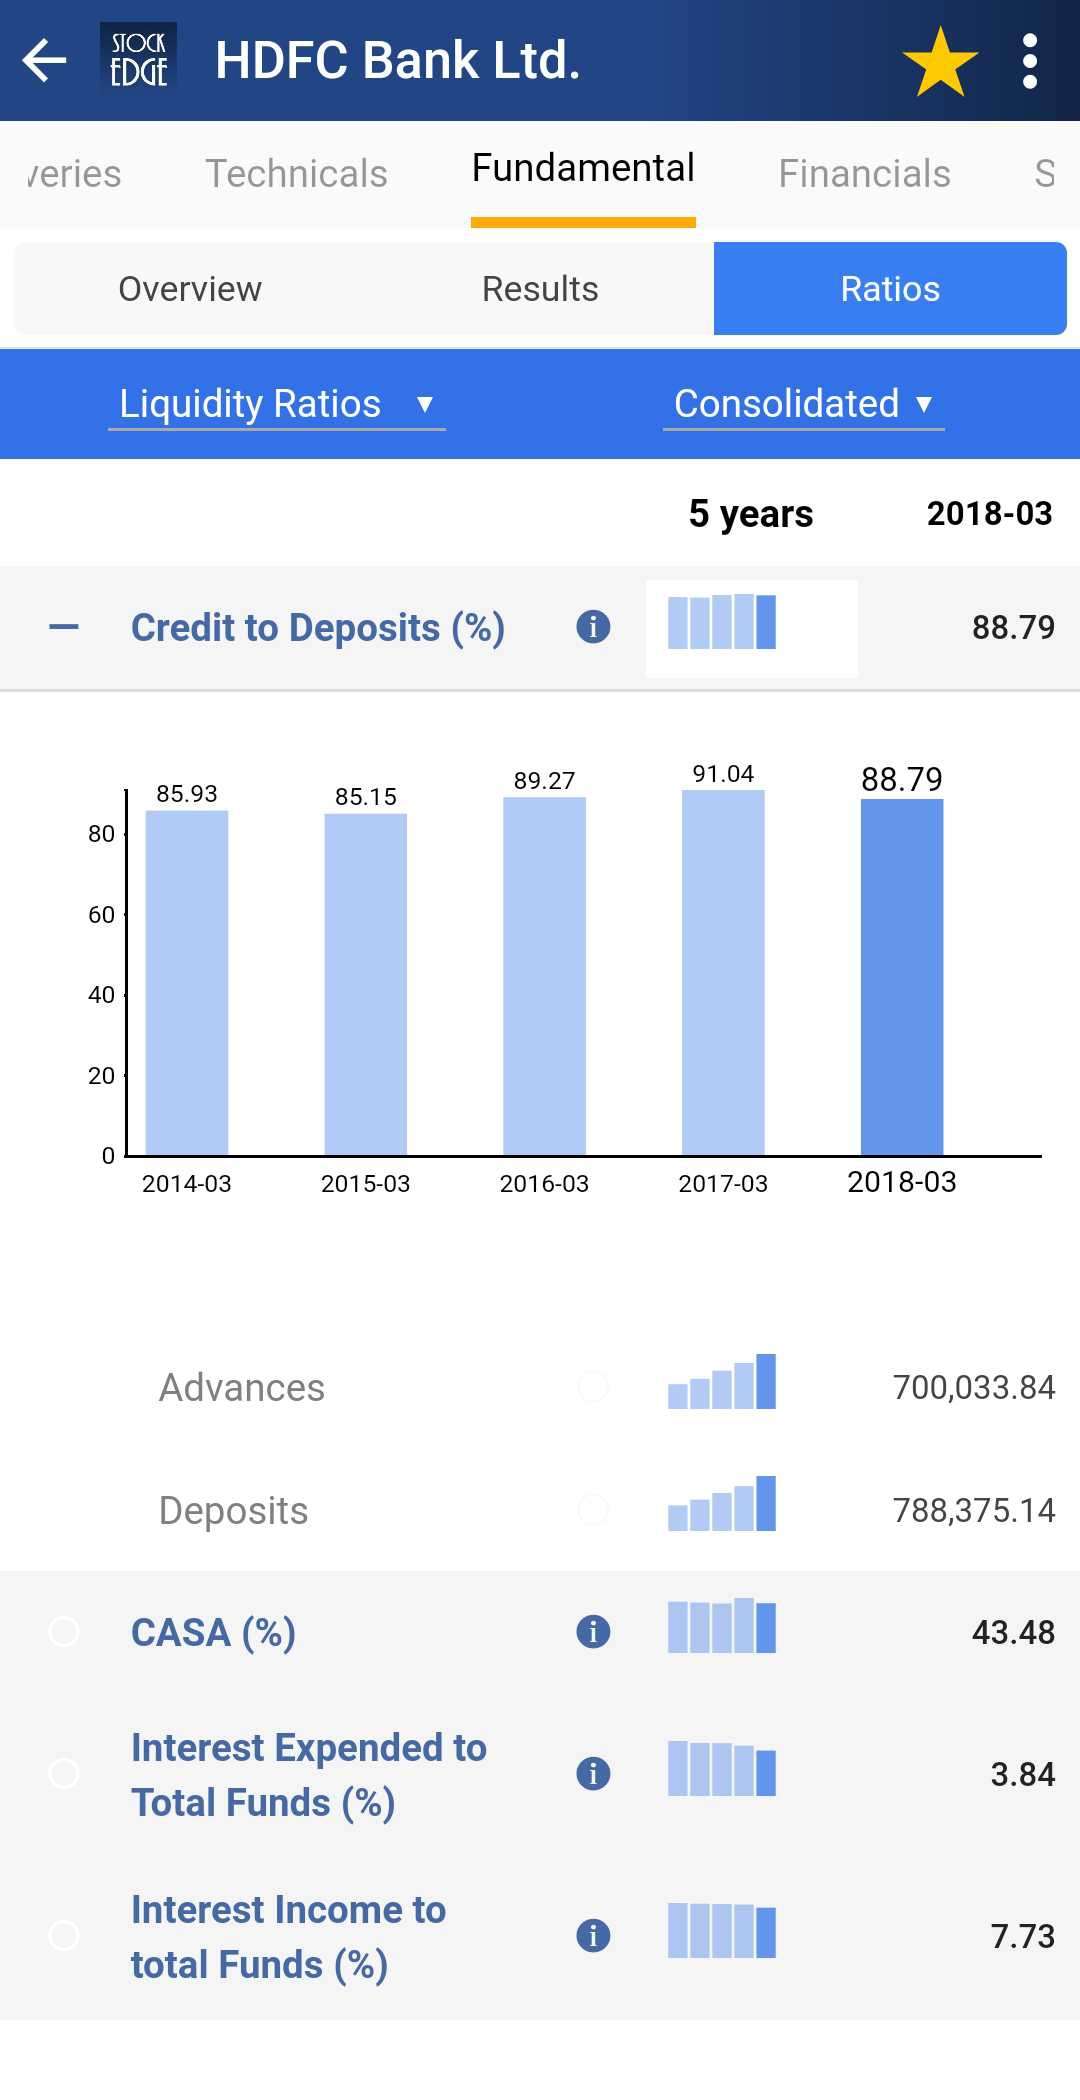 Loans to deposit ratio or credit to deposit ratio